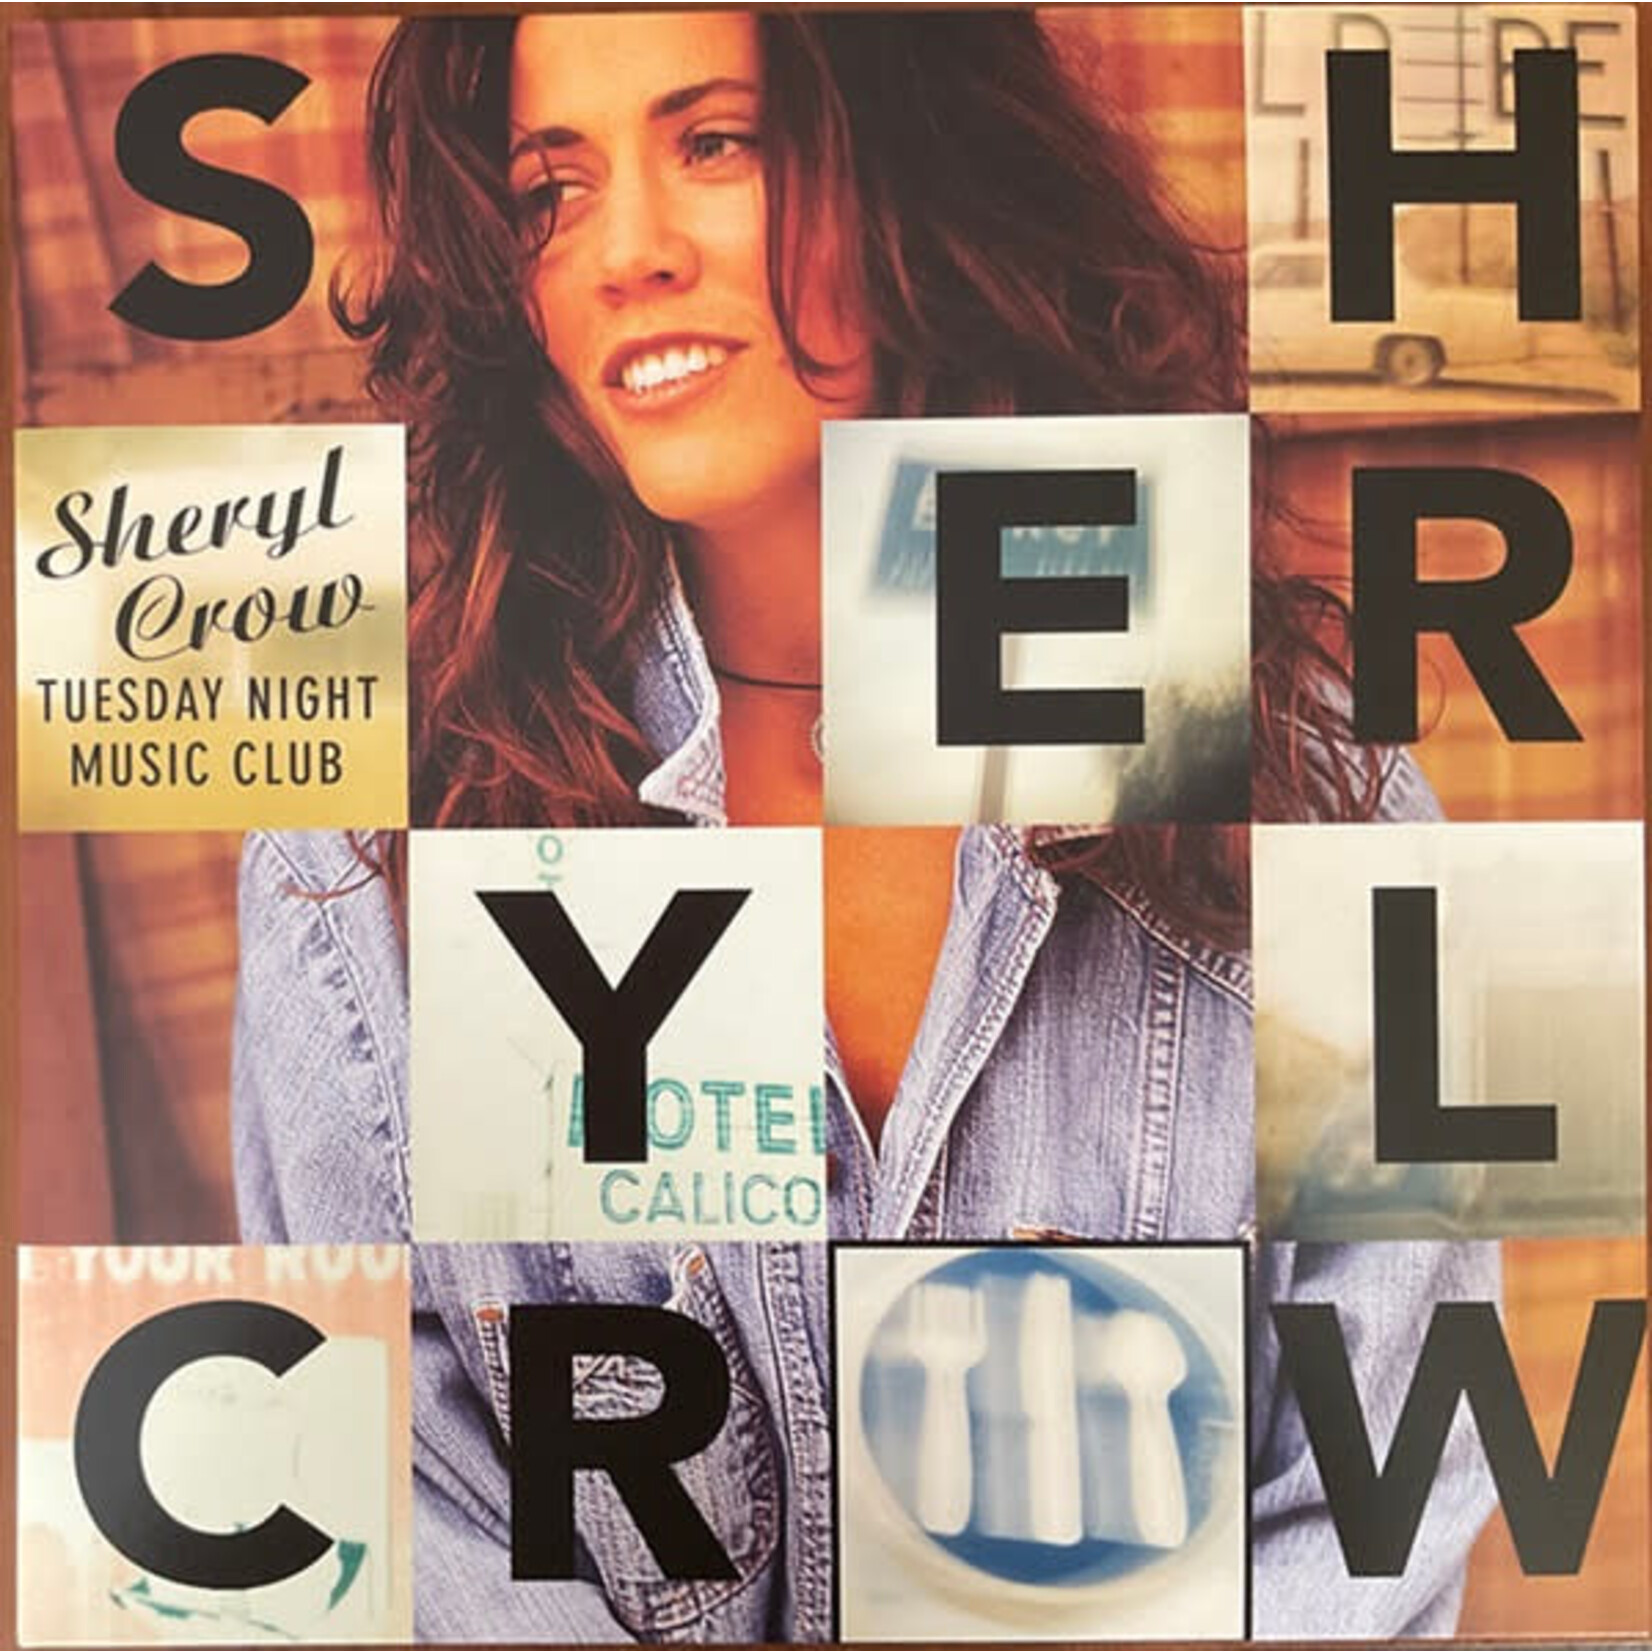 [New] Sheryl Crow - Tuesday Night Music Club (30th Anniversary, vinyl reissue)